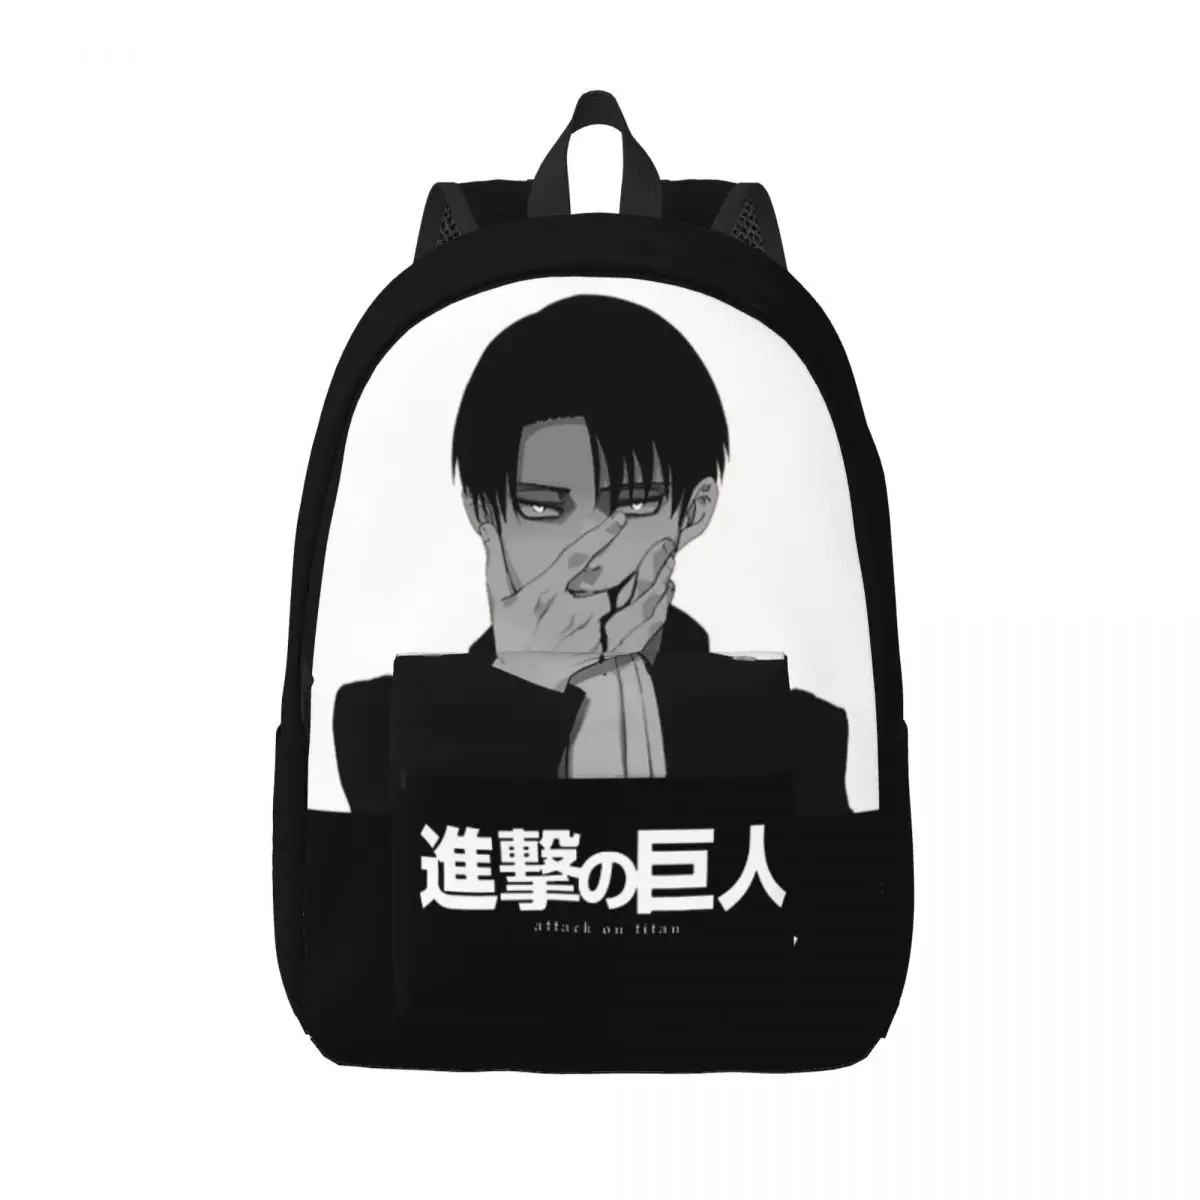 

Attack On Titan Backpack for Boy Girl Kids Student School Bookbag Best Anime Shingeki no Kyojin Daypack Preschool Primary Bag